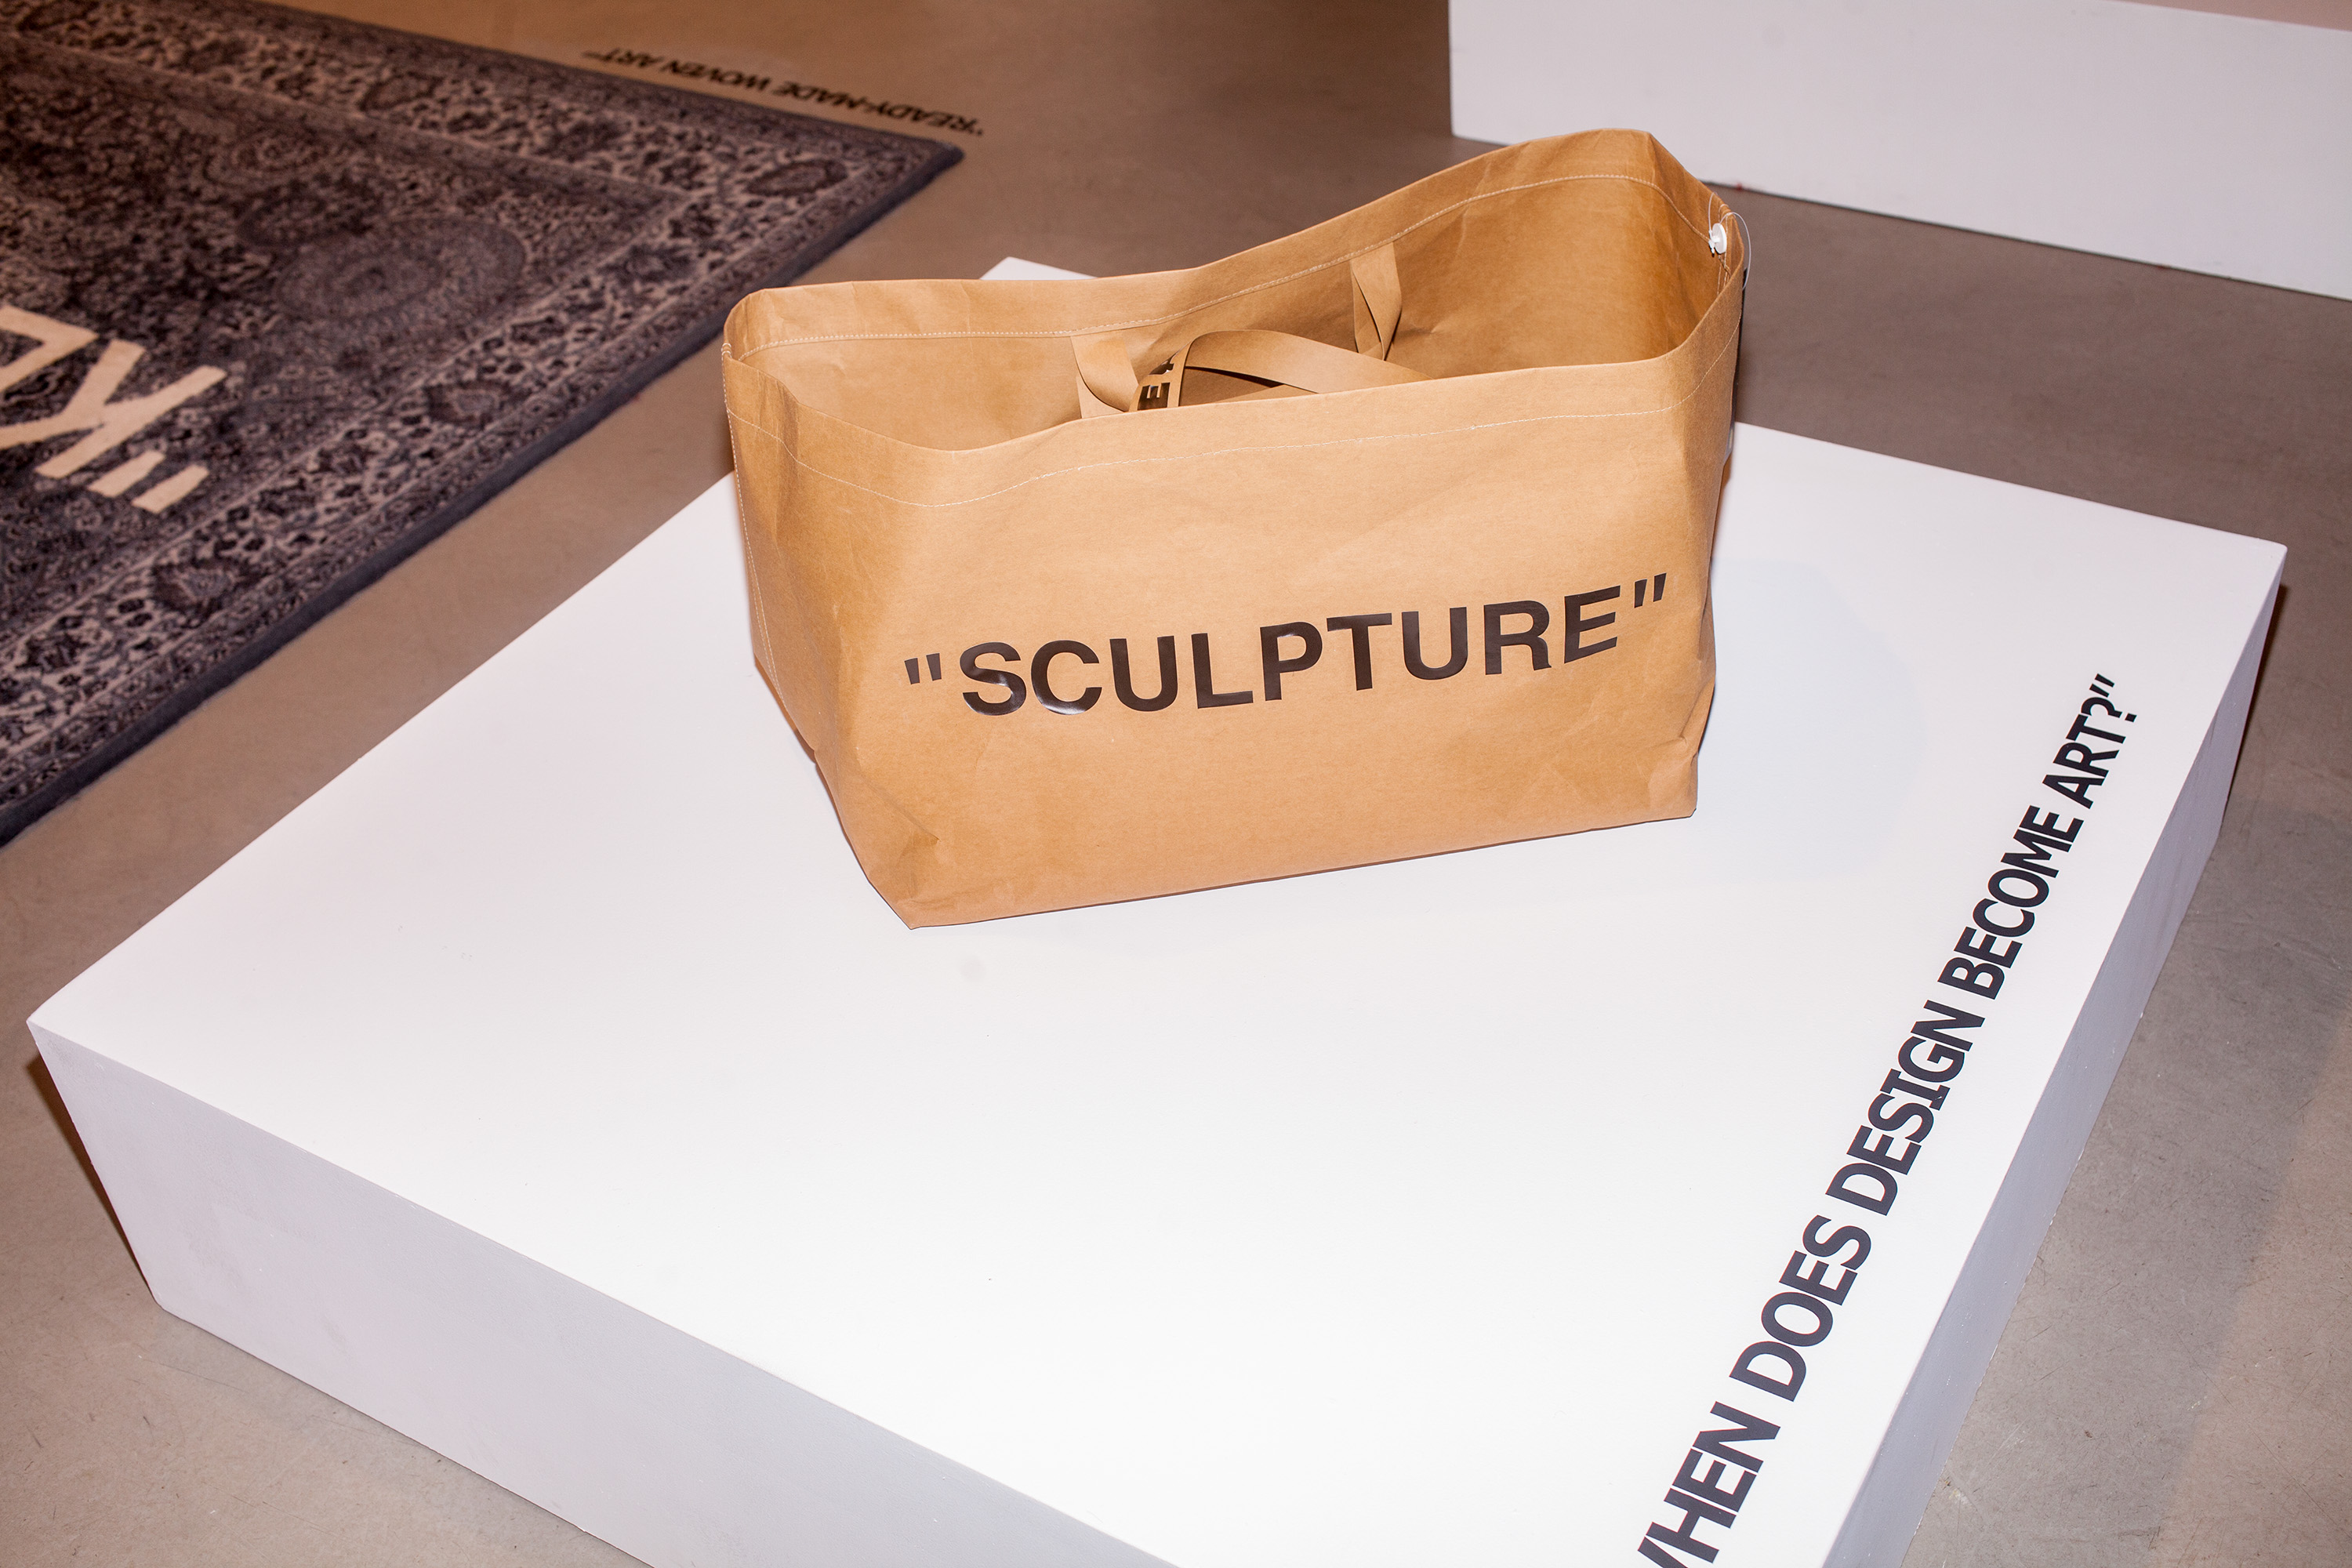 Virgil Abloh - Ikea X Off White - Bag - Markerad Sculpture, - Catawiki